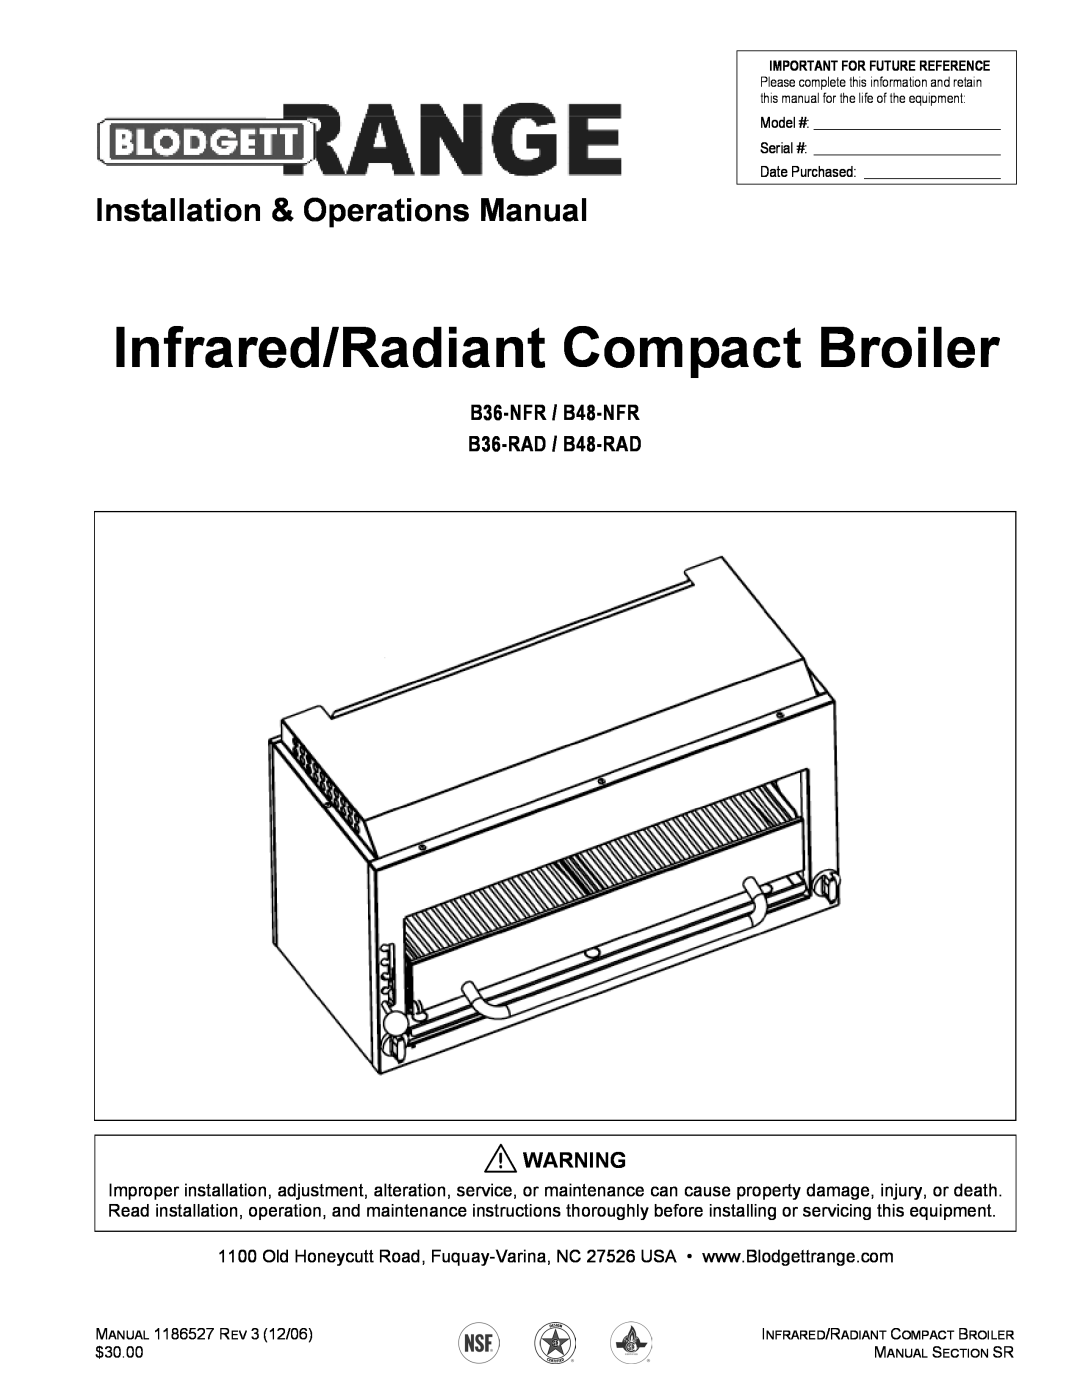 Blodgett manual B36-NFR / B48-NFR B36-RAD / B48-RAD, Infrared/Radiant Compact Broiler, Installation & Operations Manual 